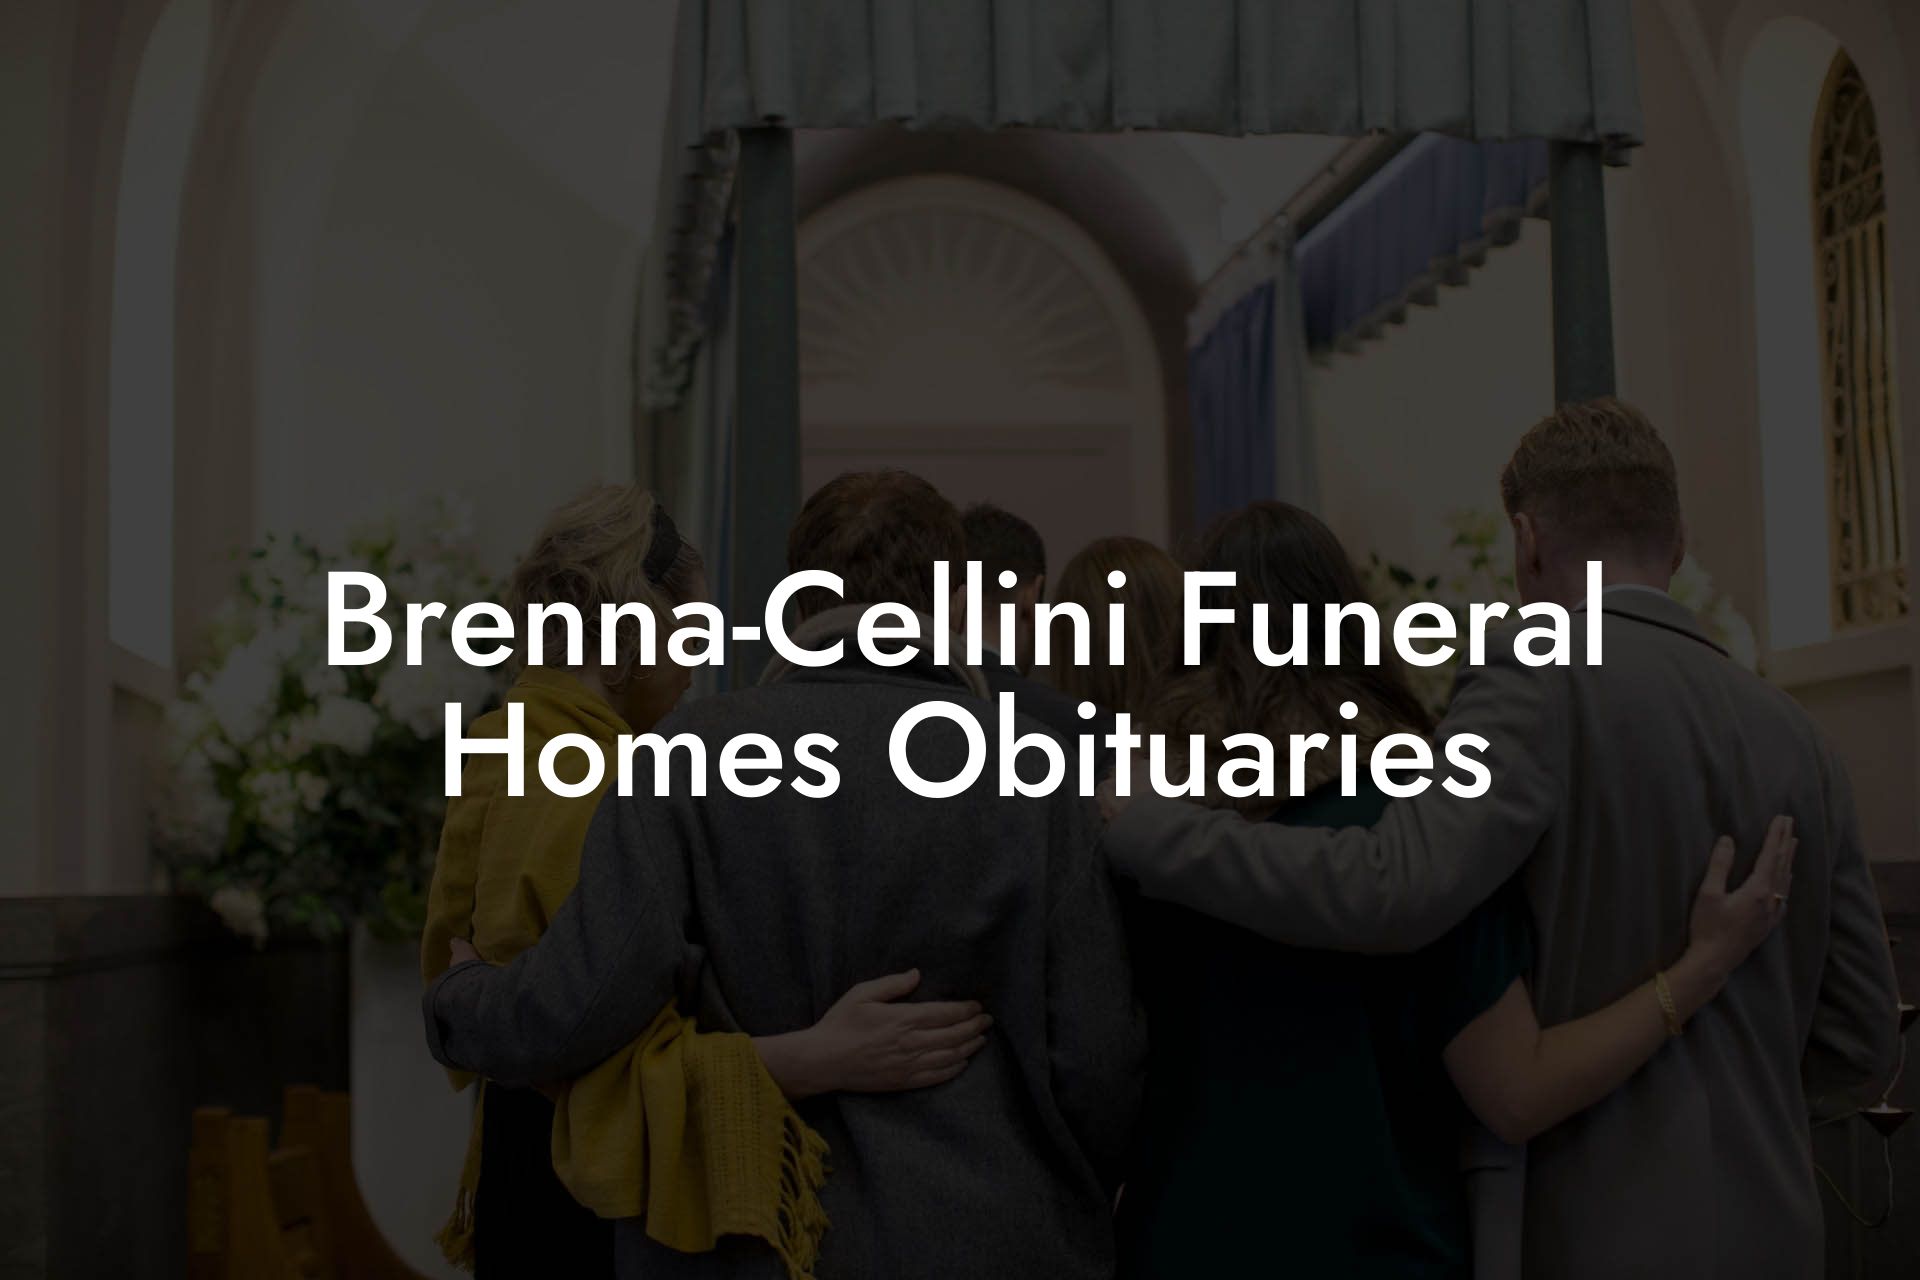 Brenna-Cellini Funeral Homes Obituaries